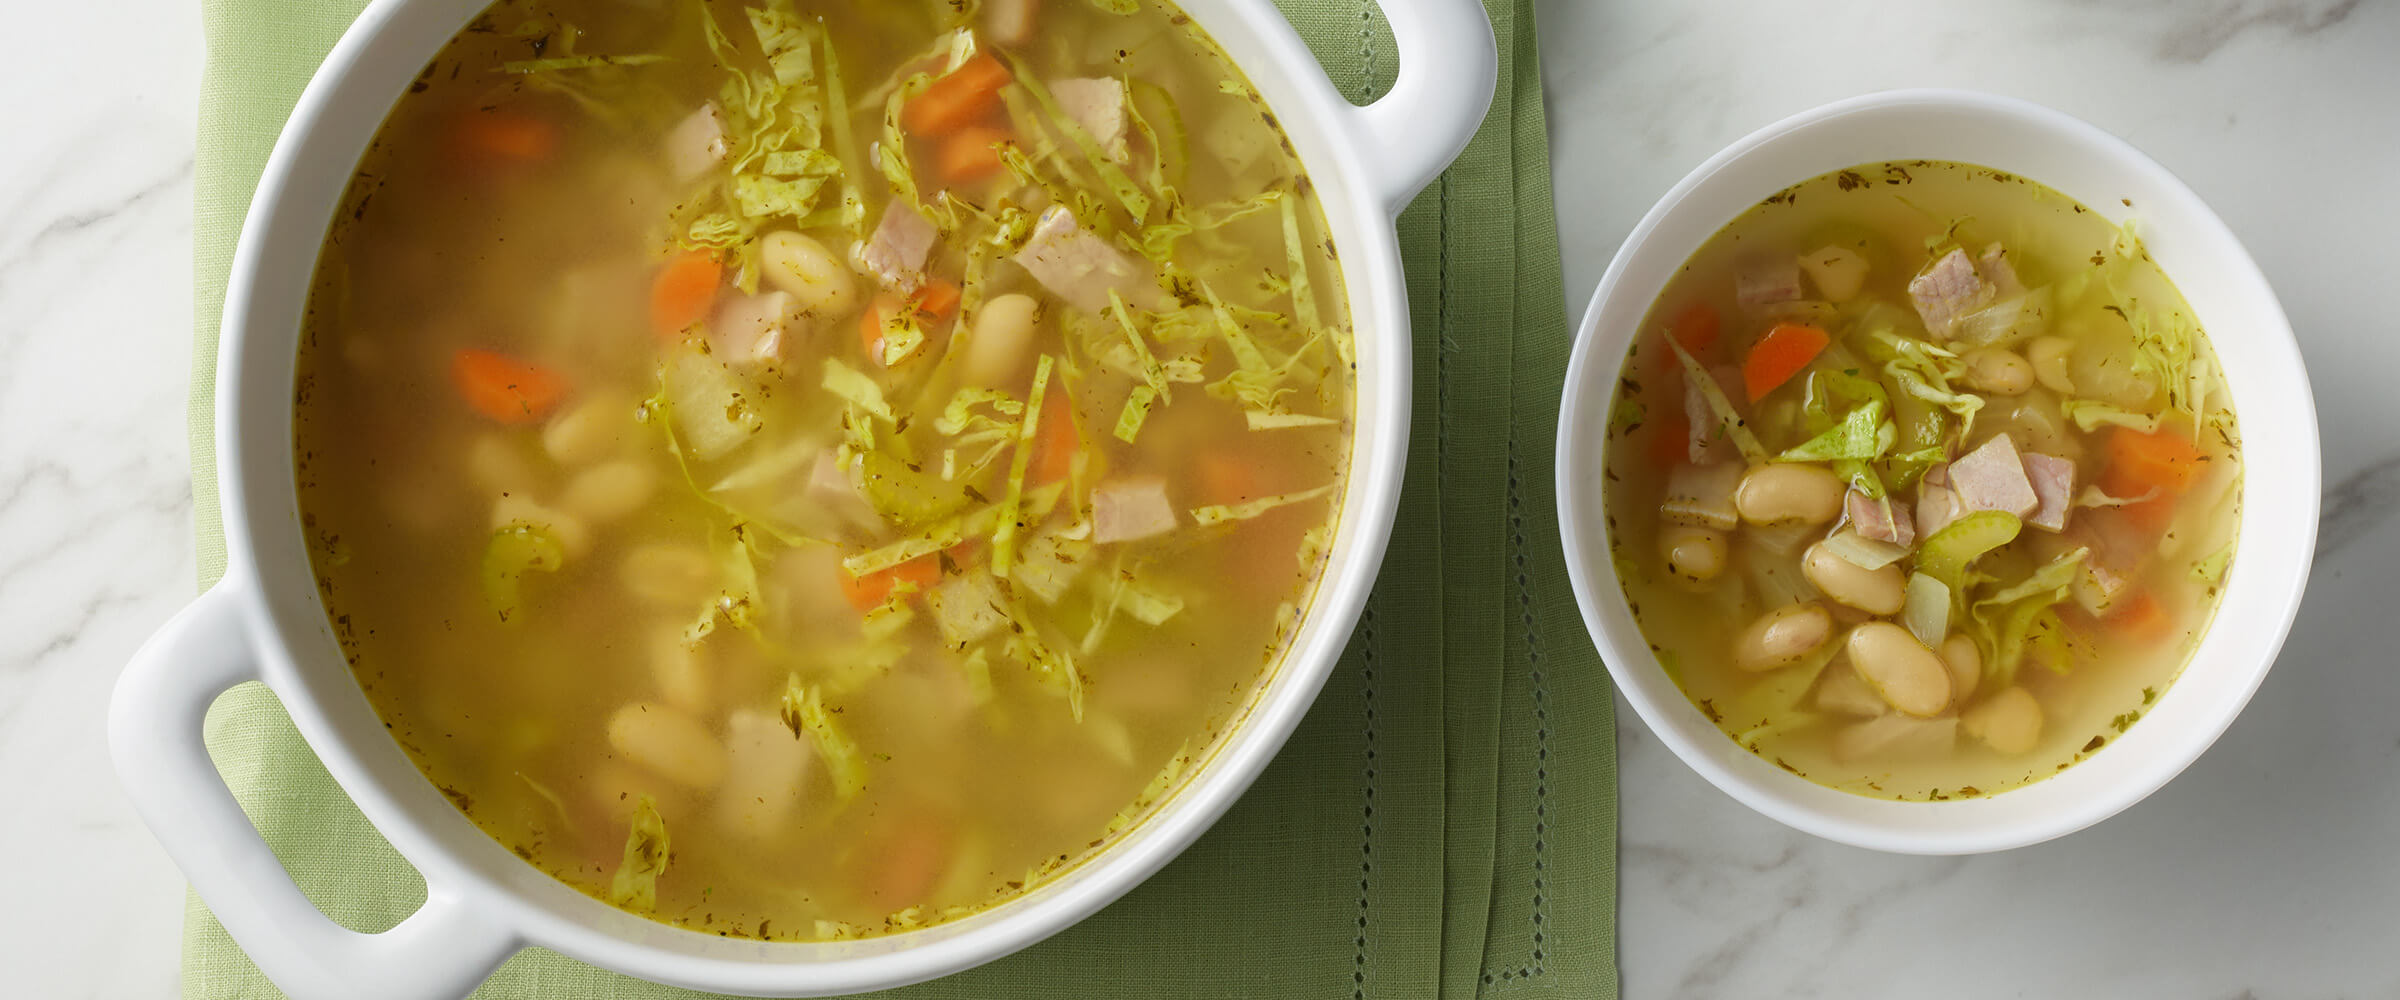 Sunday Soups - Inspired - Hormel Foods